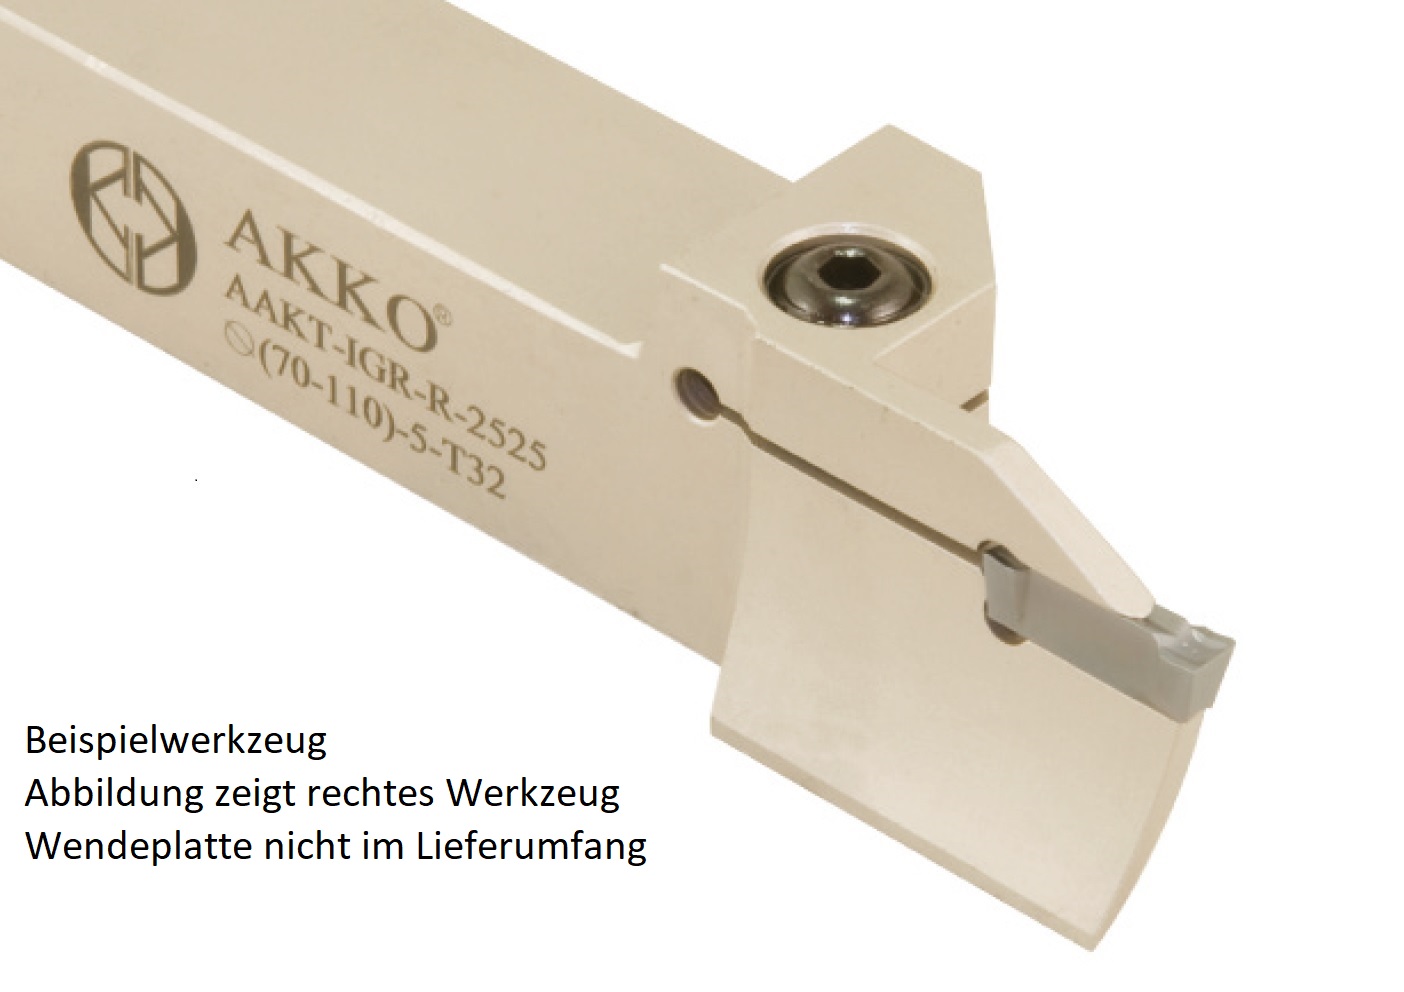 AKKO-Axial-Stechhalter, kompatibel mit Iscar-Stechplatte DGN / GRP-4
Schaft-ø 25x25, Einstechbereich ø 110 - ø 200 mm, rechts